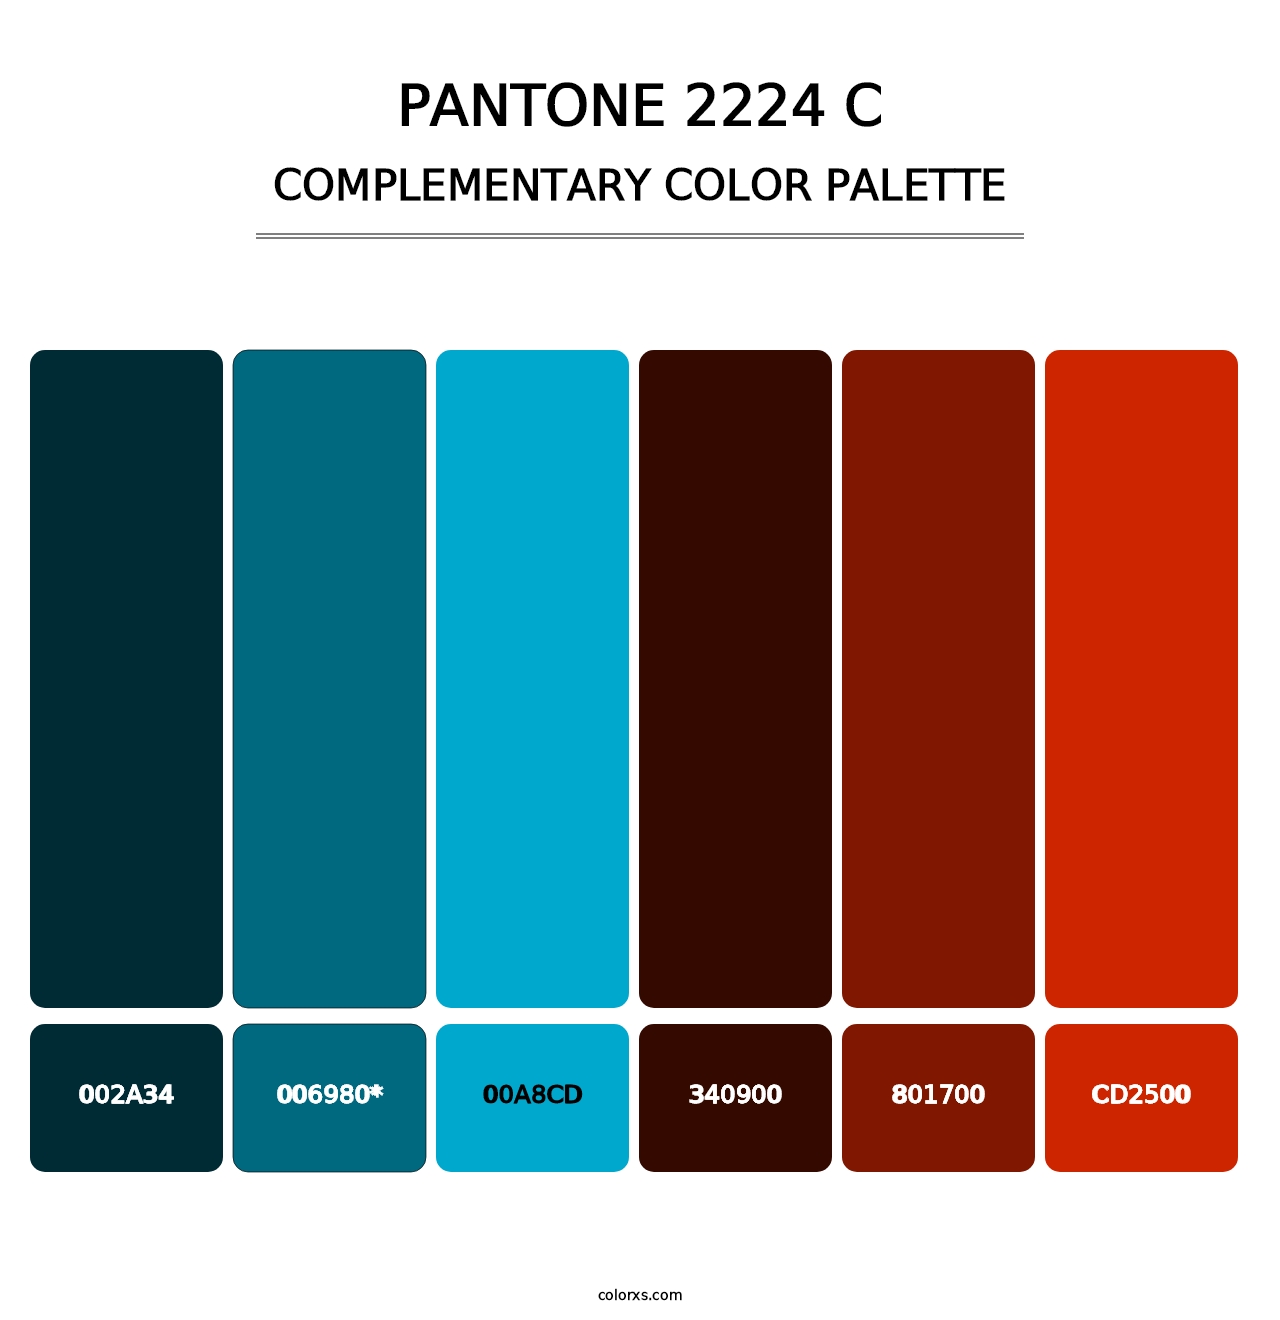 PANTONE 2224 C - Complementary Color Palette